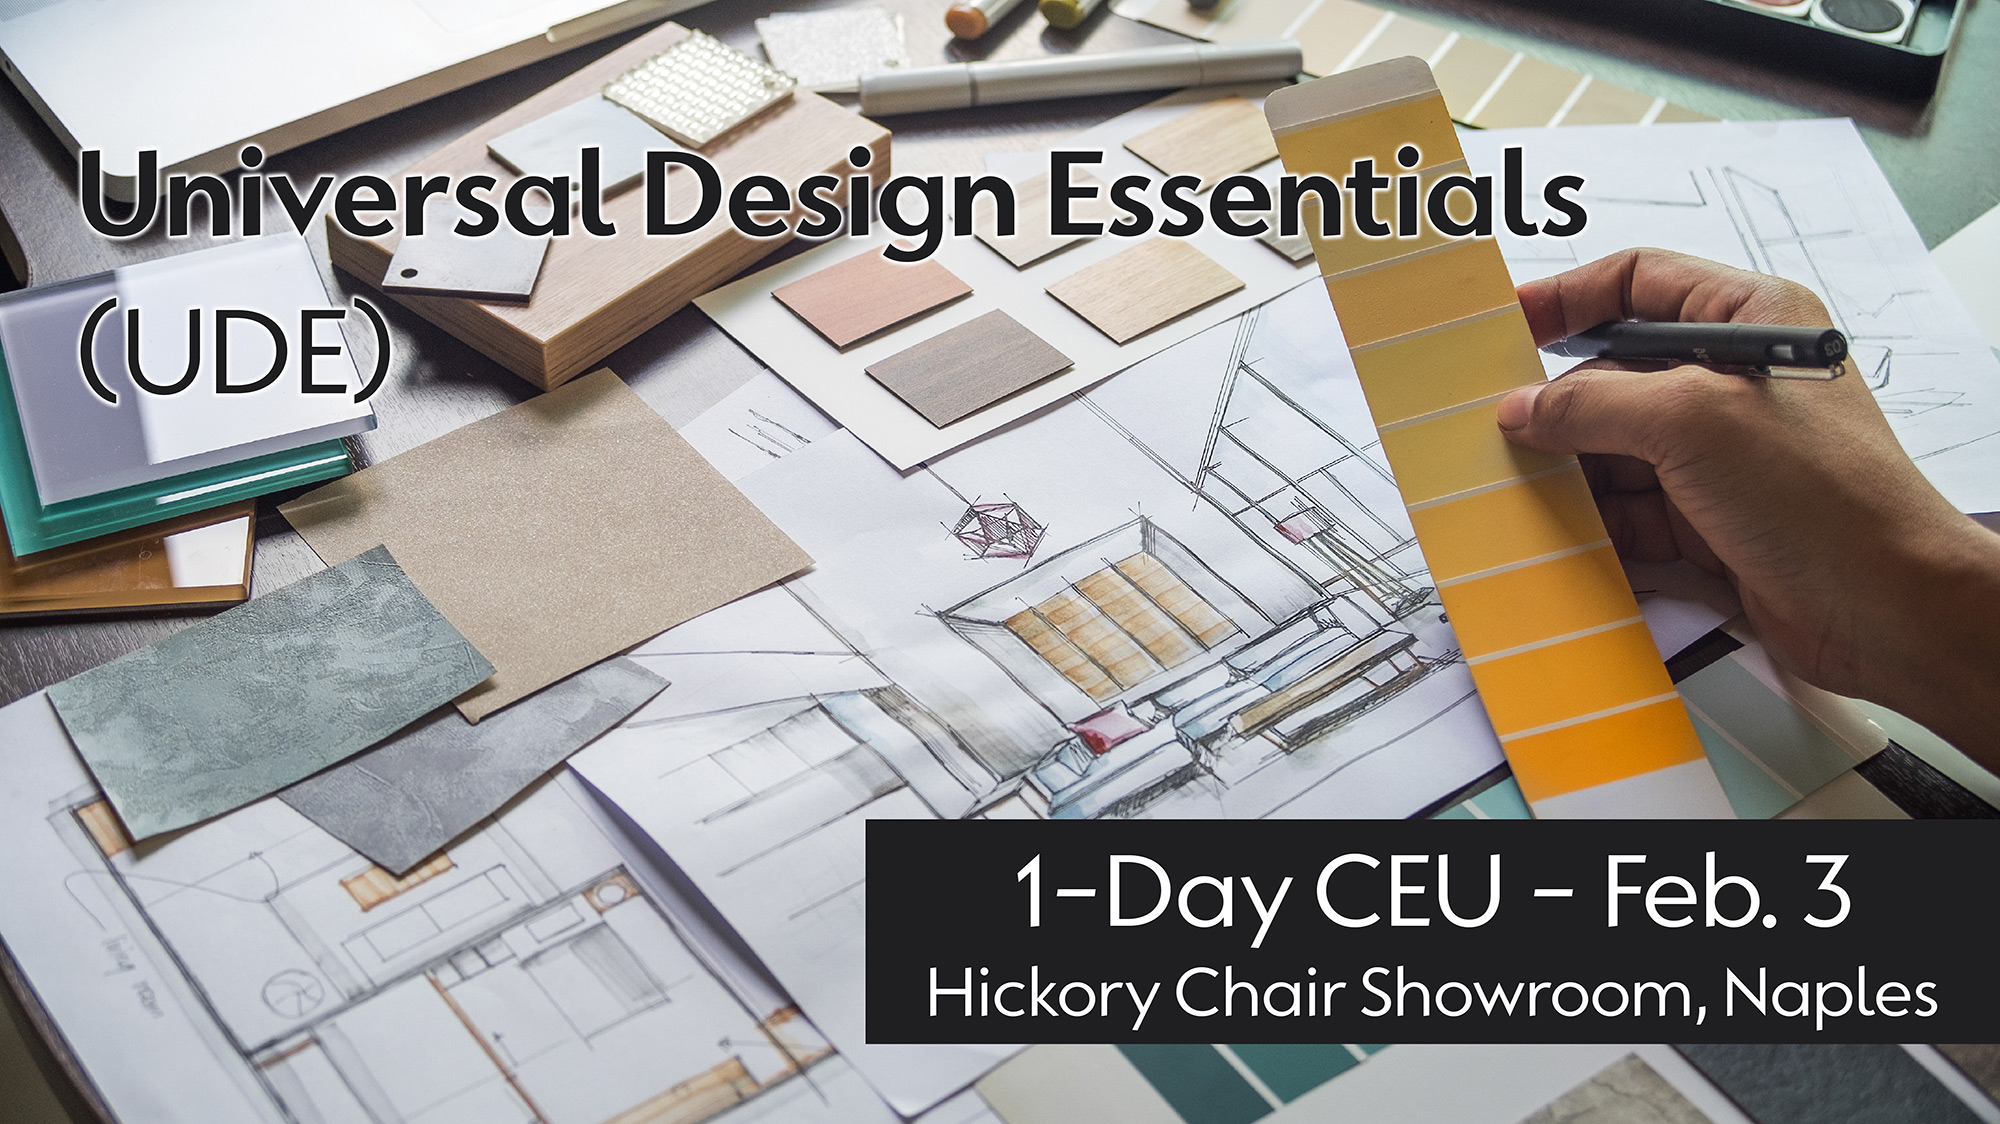 Universal Design Essentials CEU